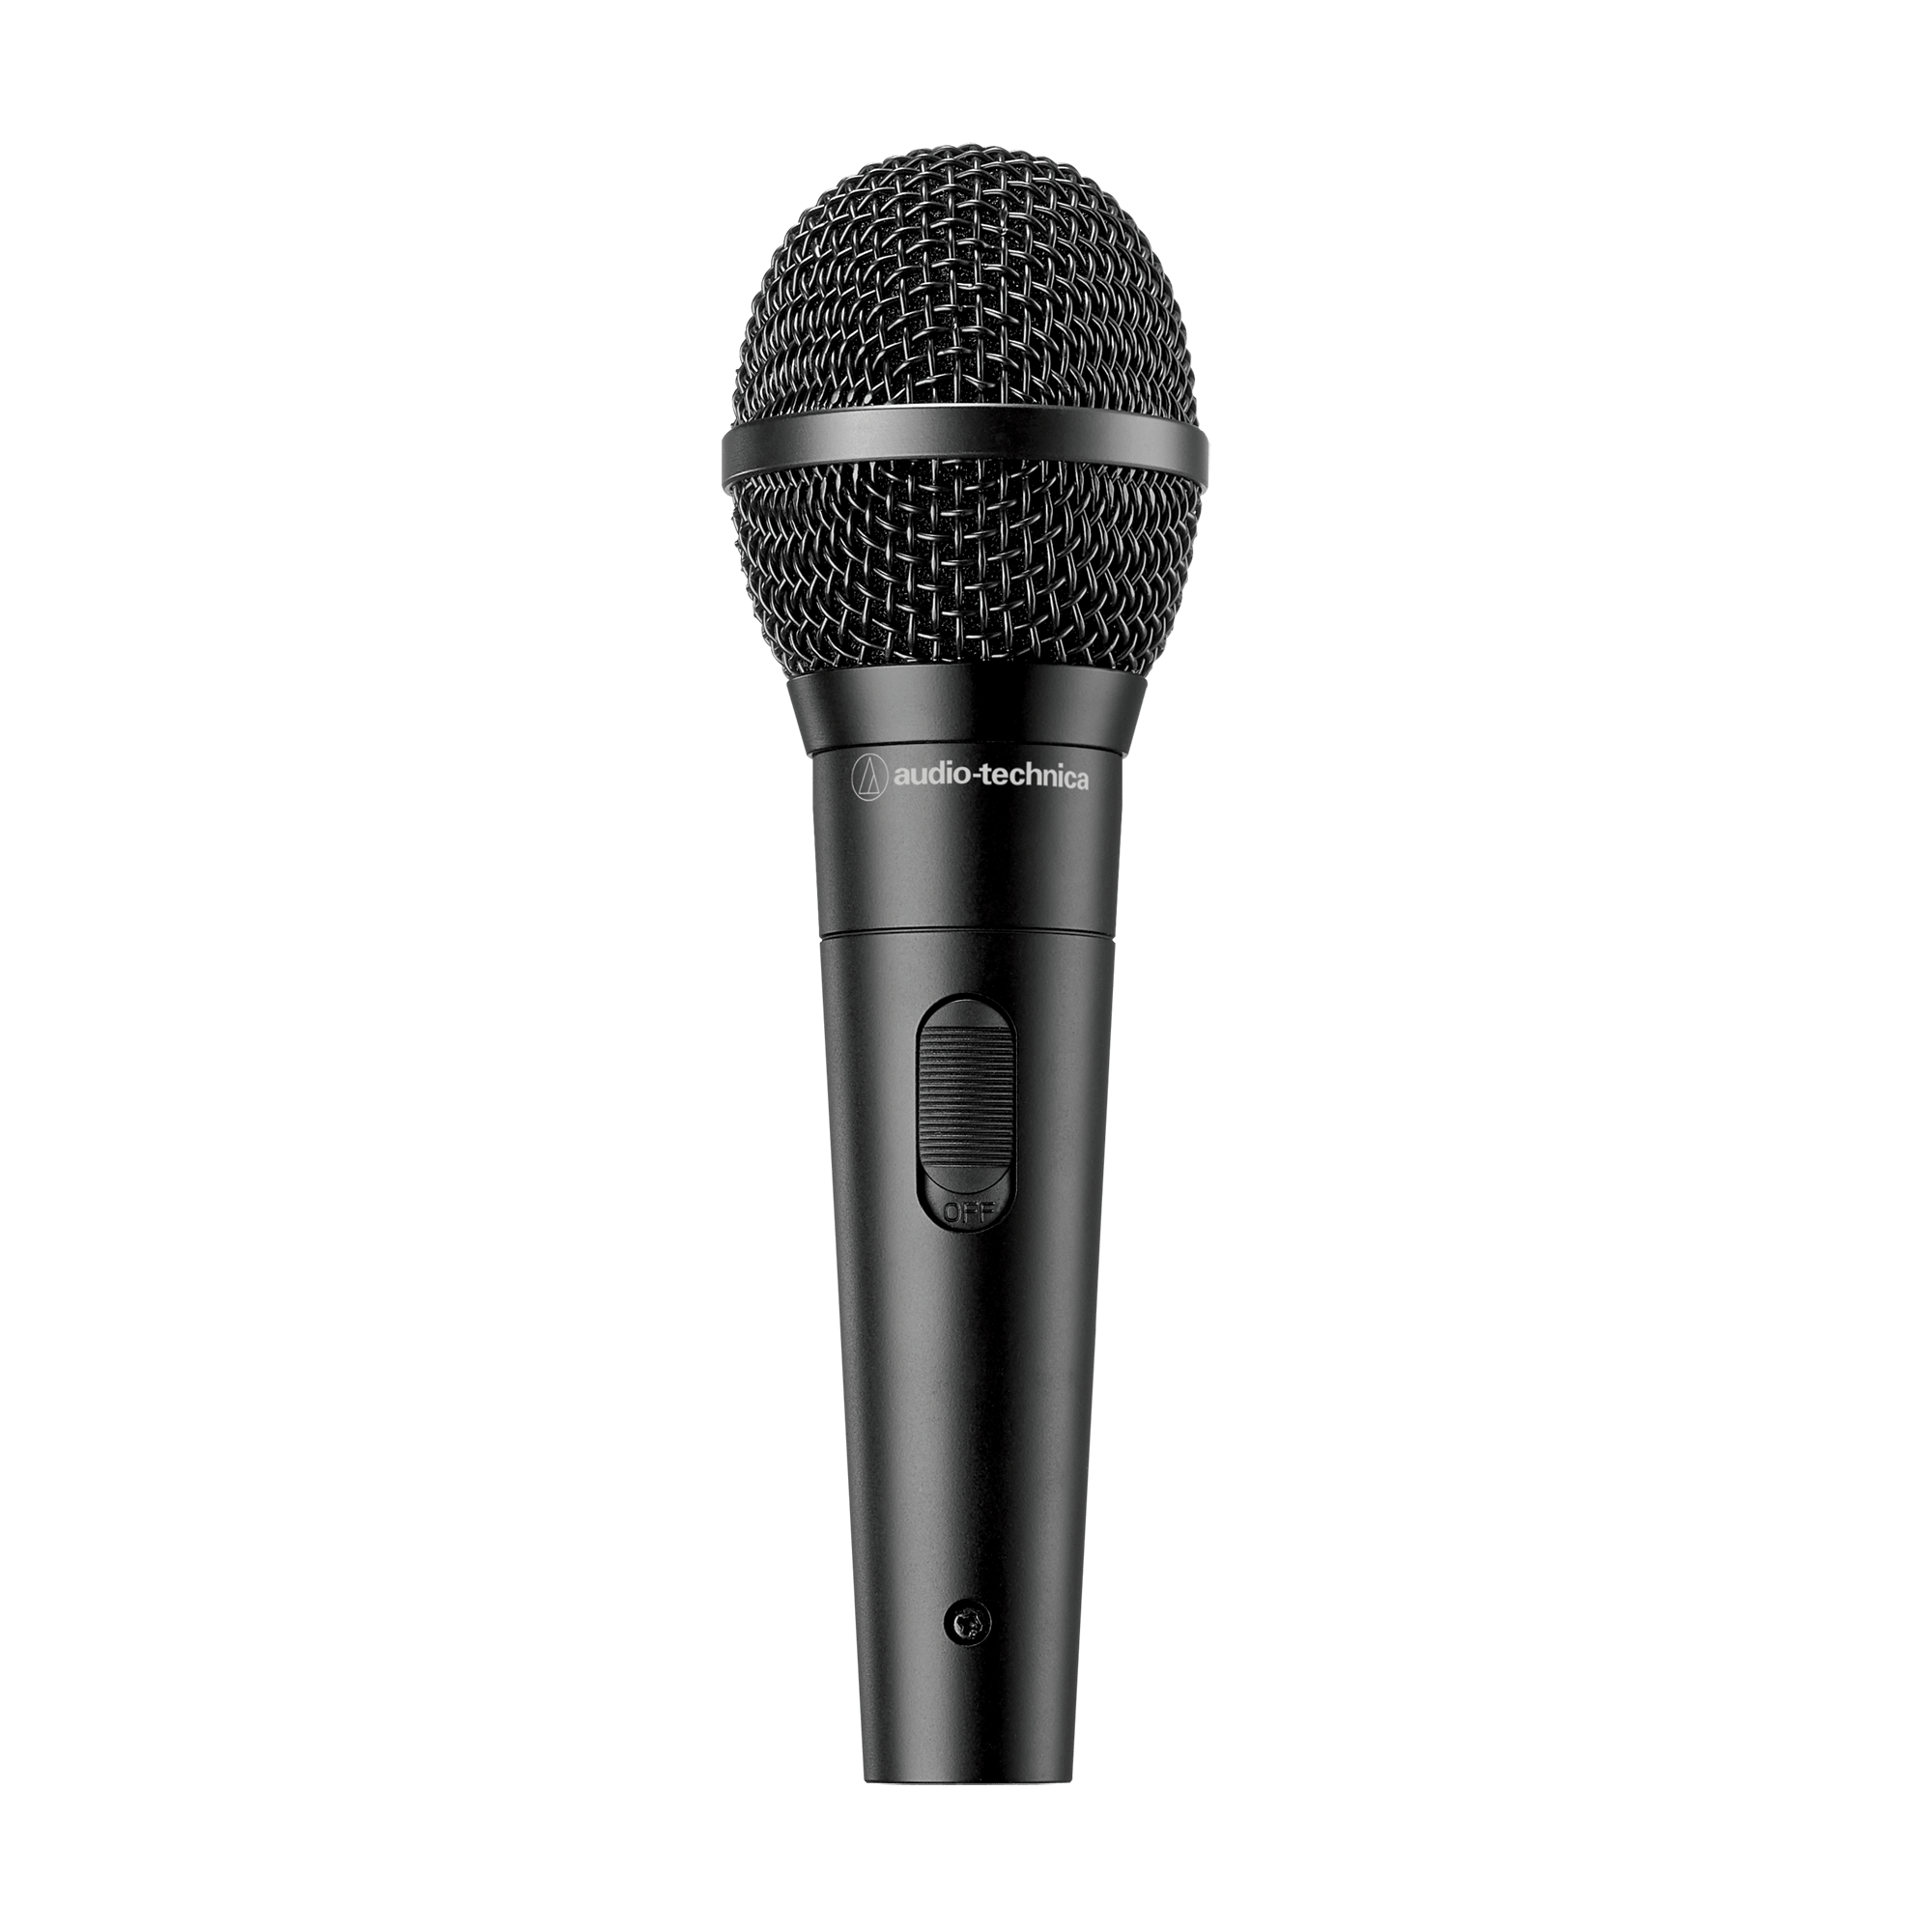 Bovenstaande Leninisme spuiten ATR1300x Unidirectional Dynamic Vocal/Instrument Microphone